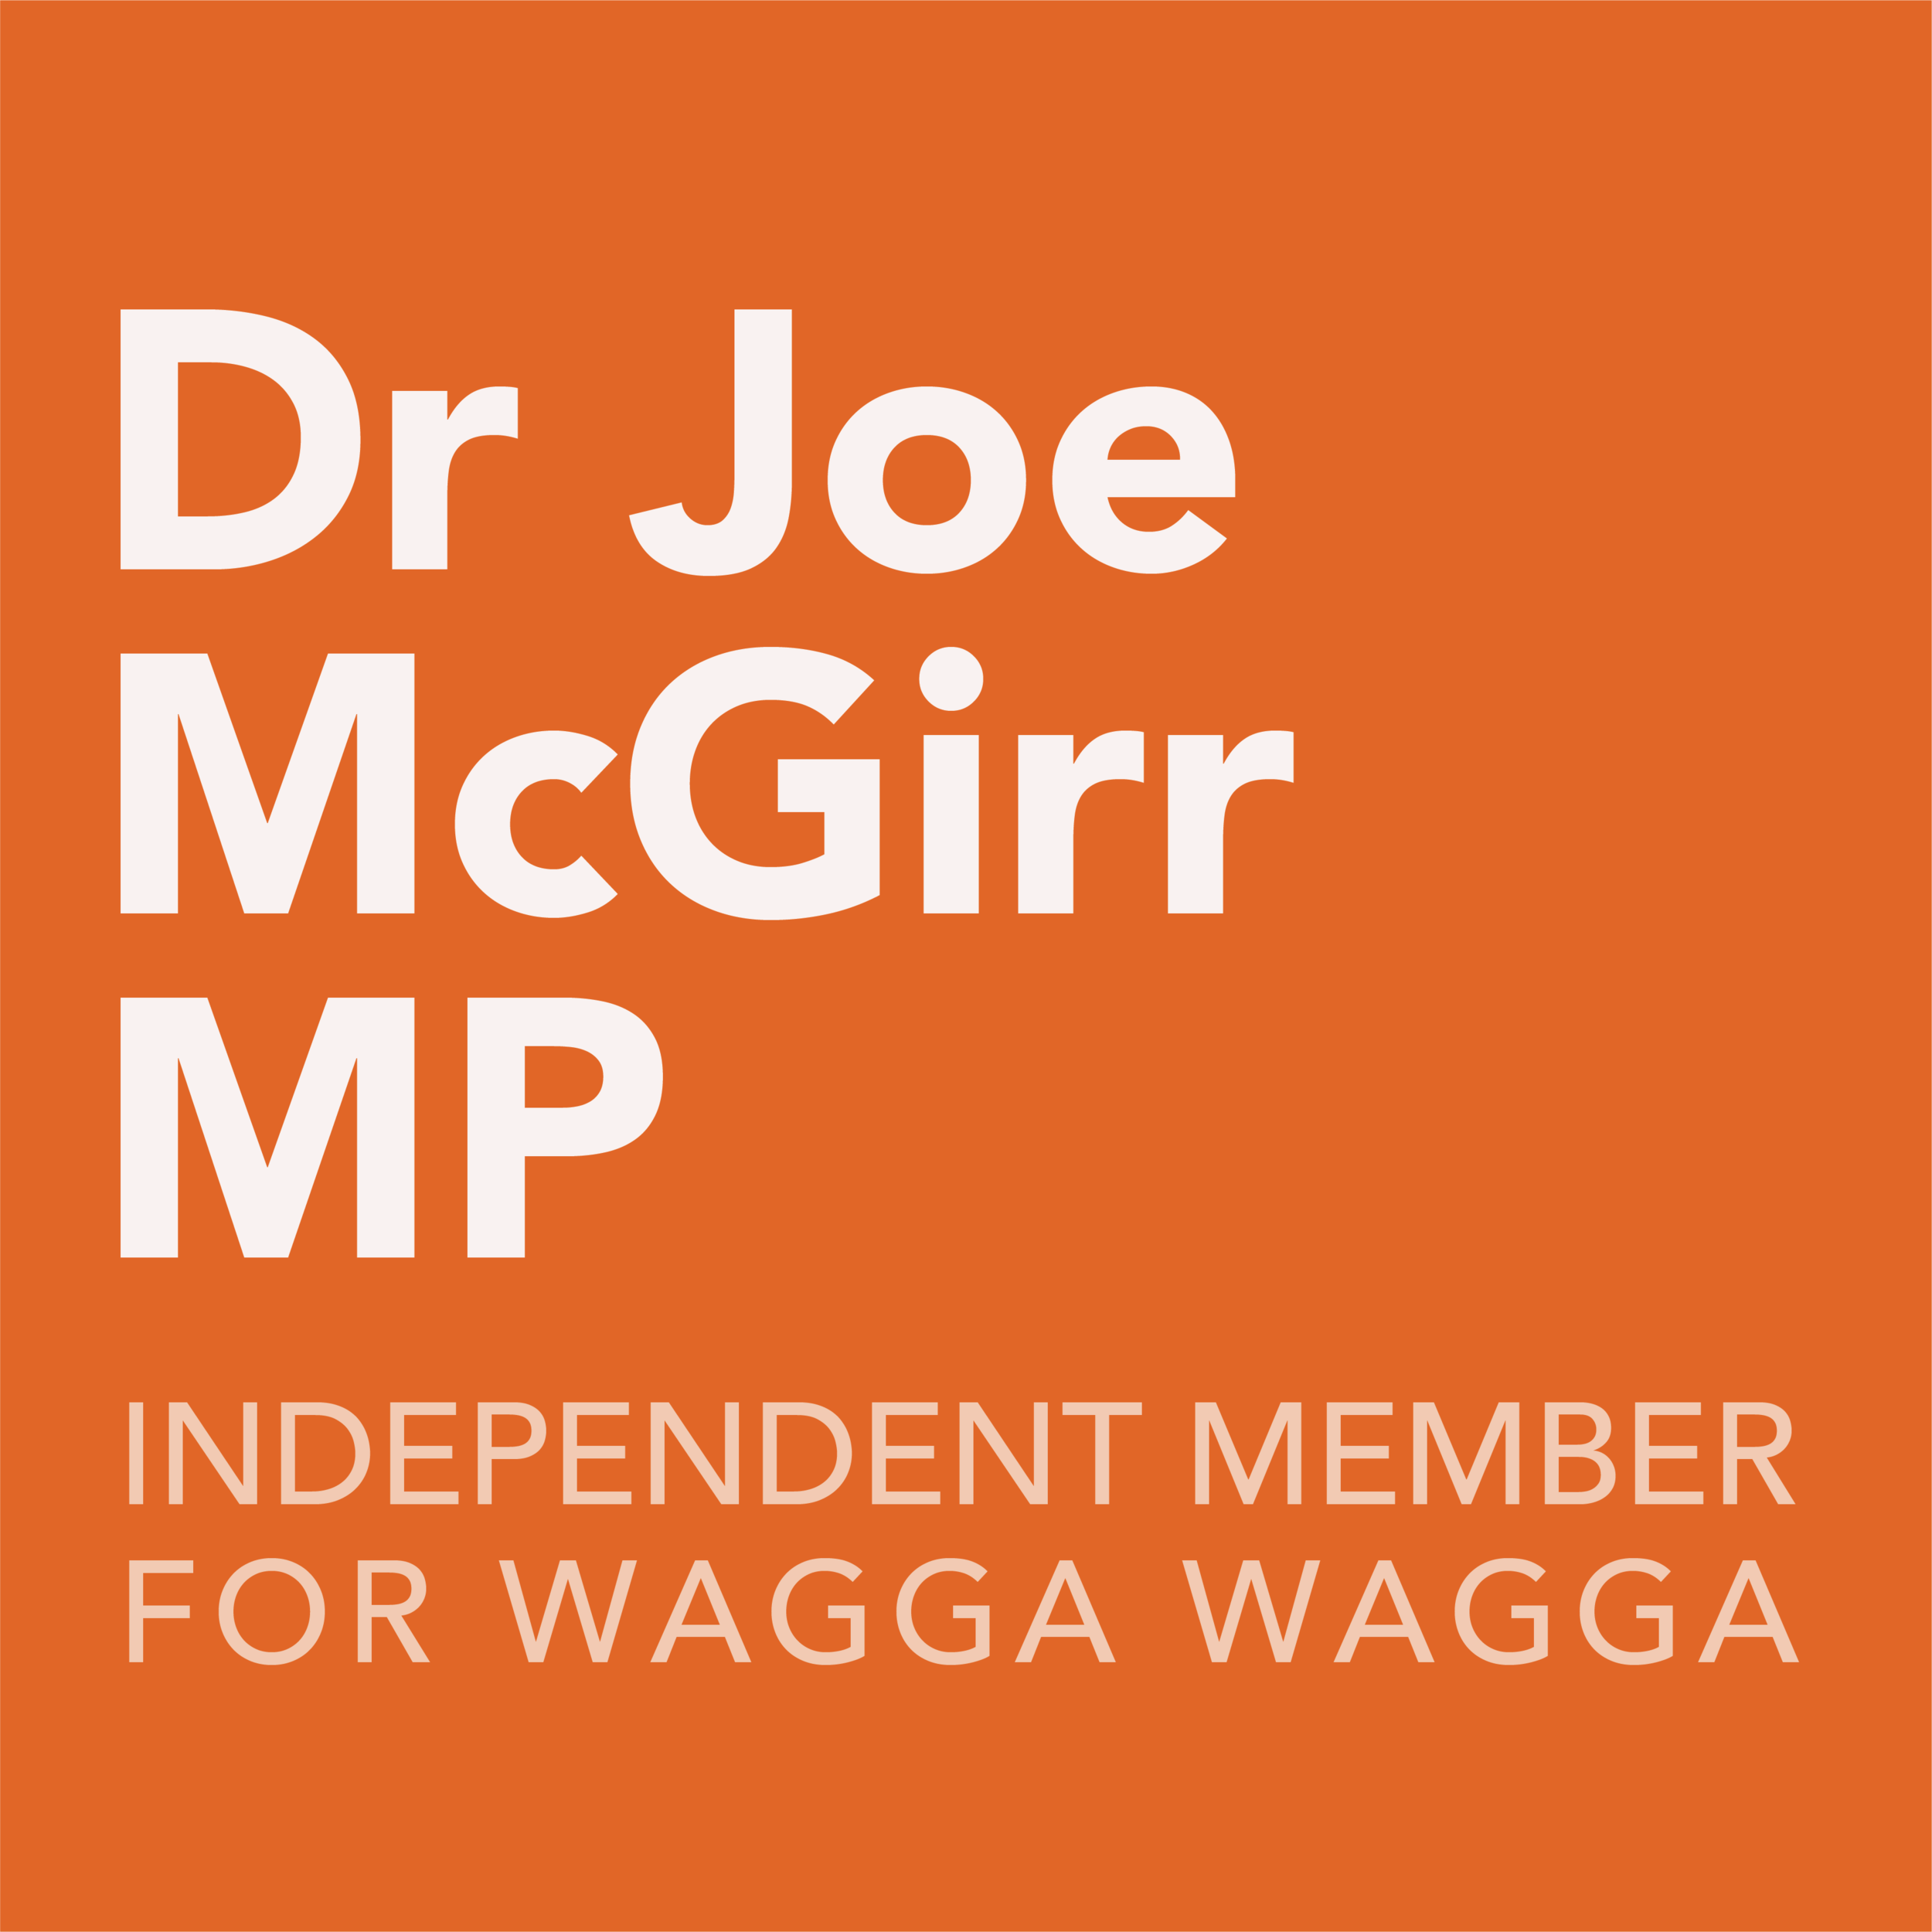 Dr Joe McGirr MP